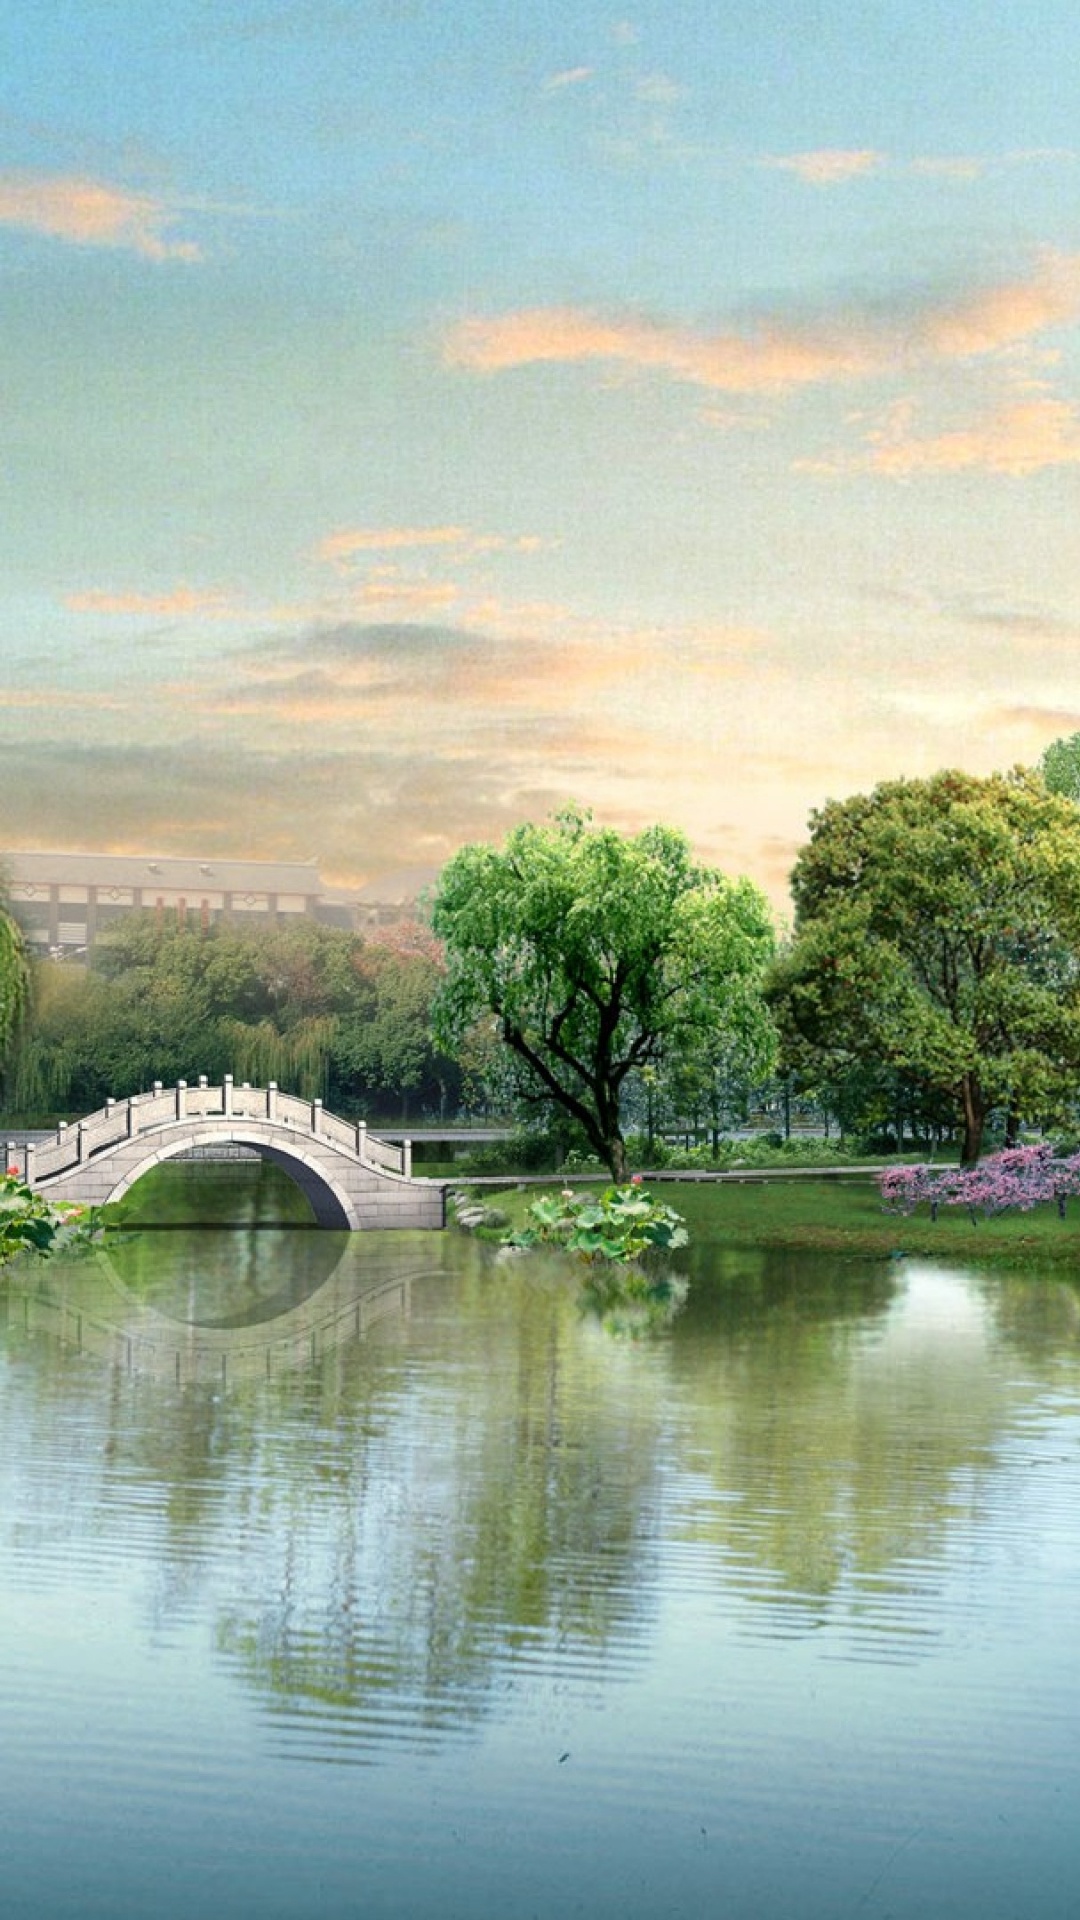 White Bridge Over River During Daytime. Wallpaper in 1080x1920 Resolution